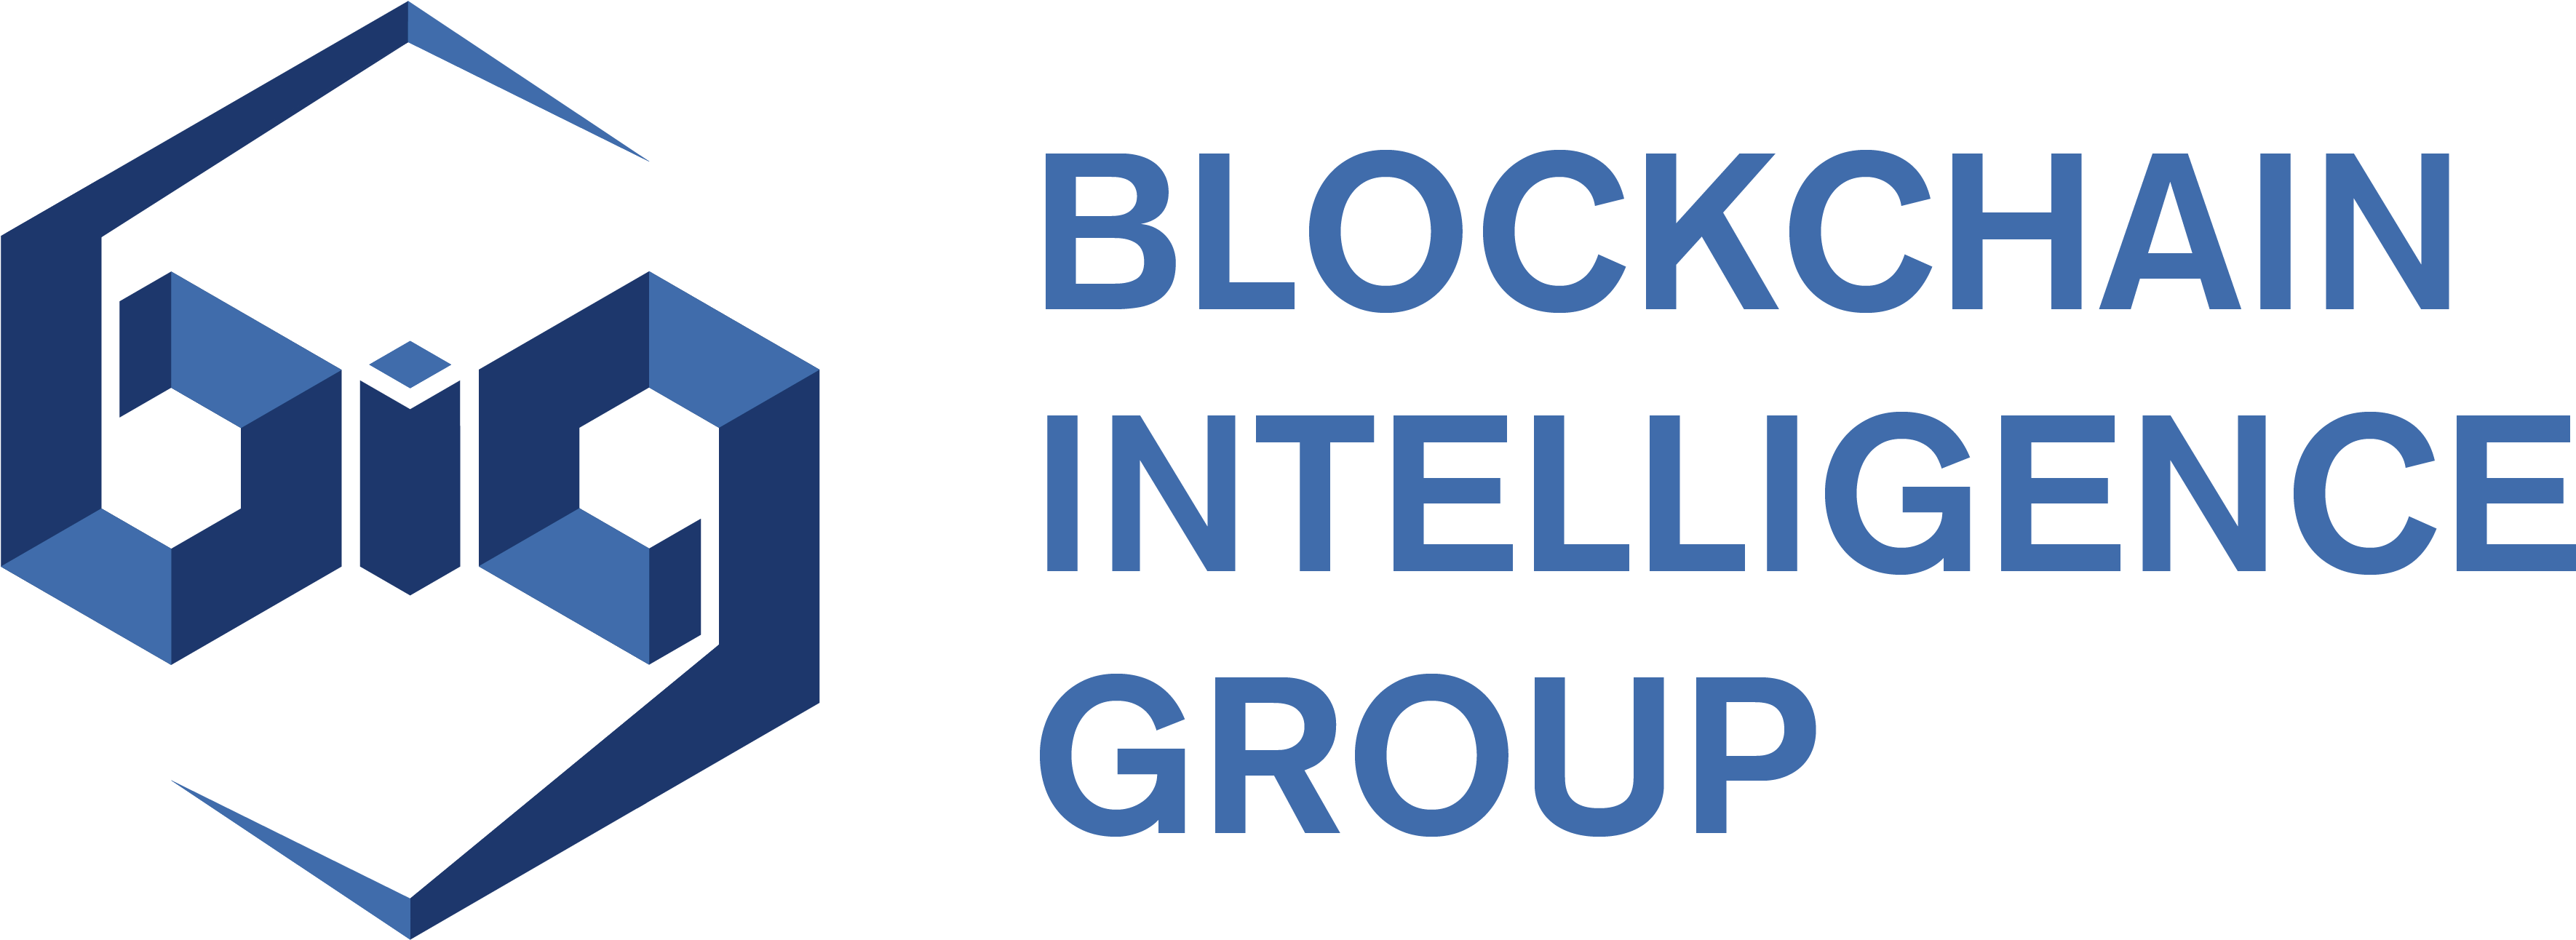 Blockchain Intelligence Group Logo